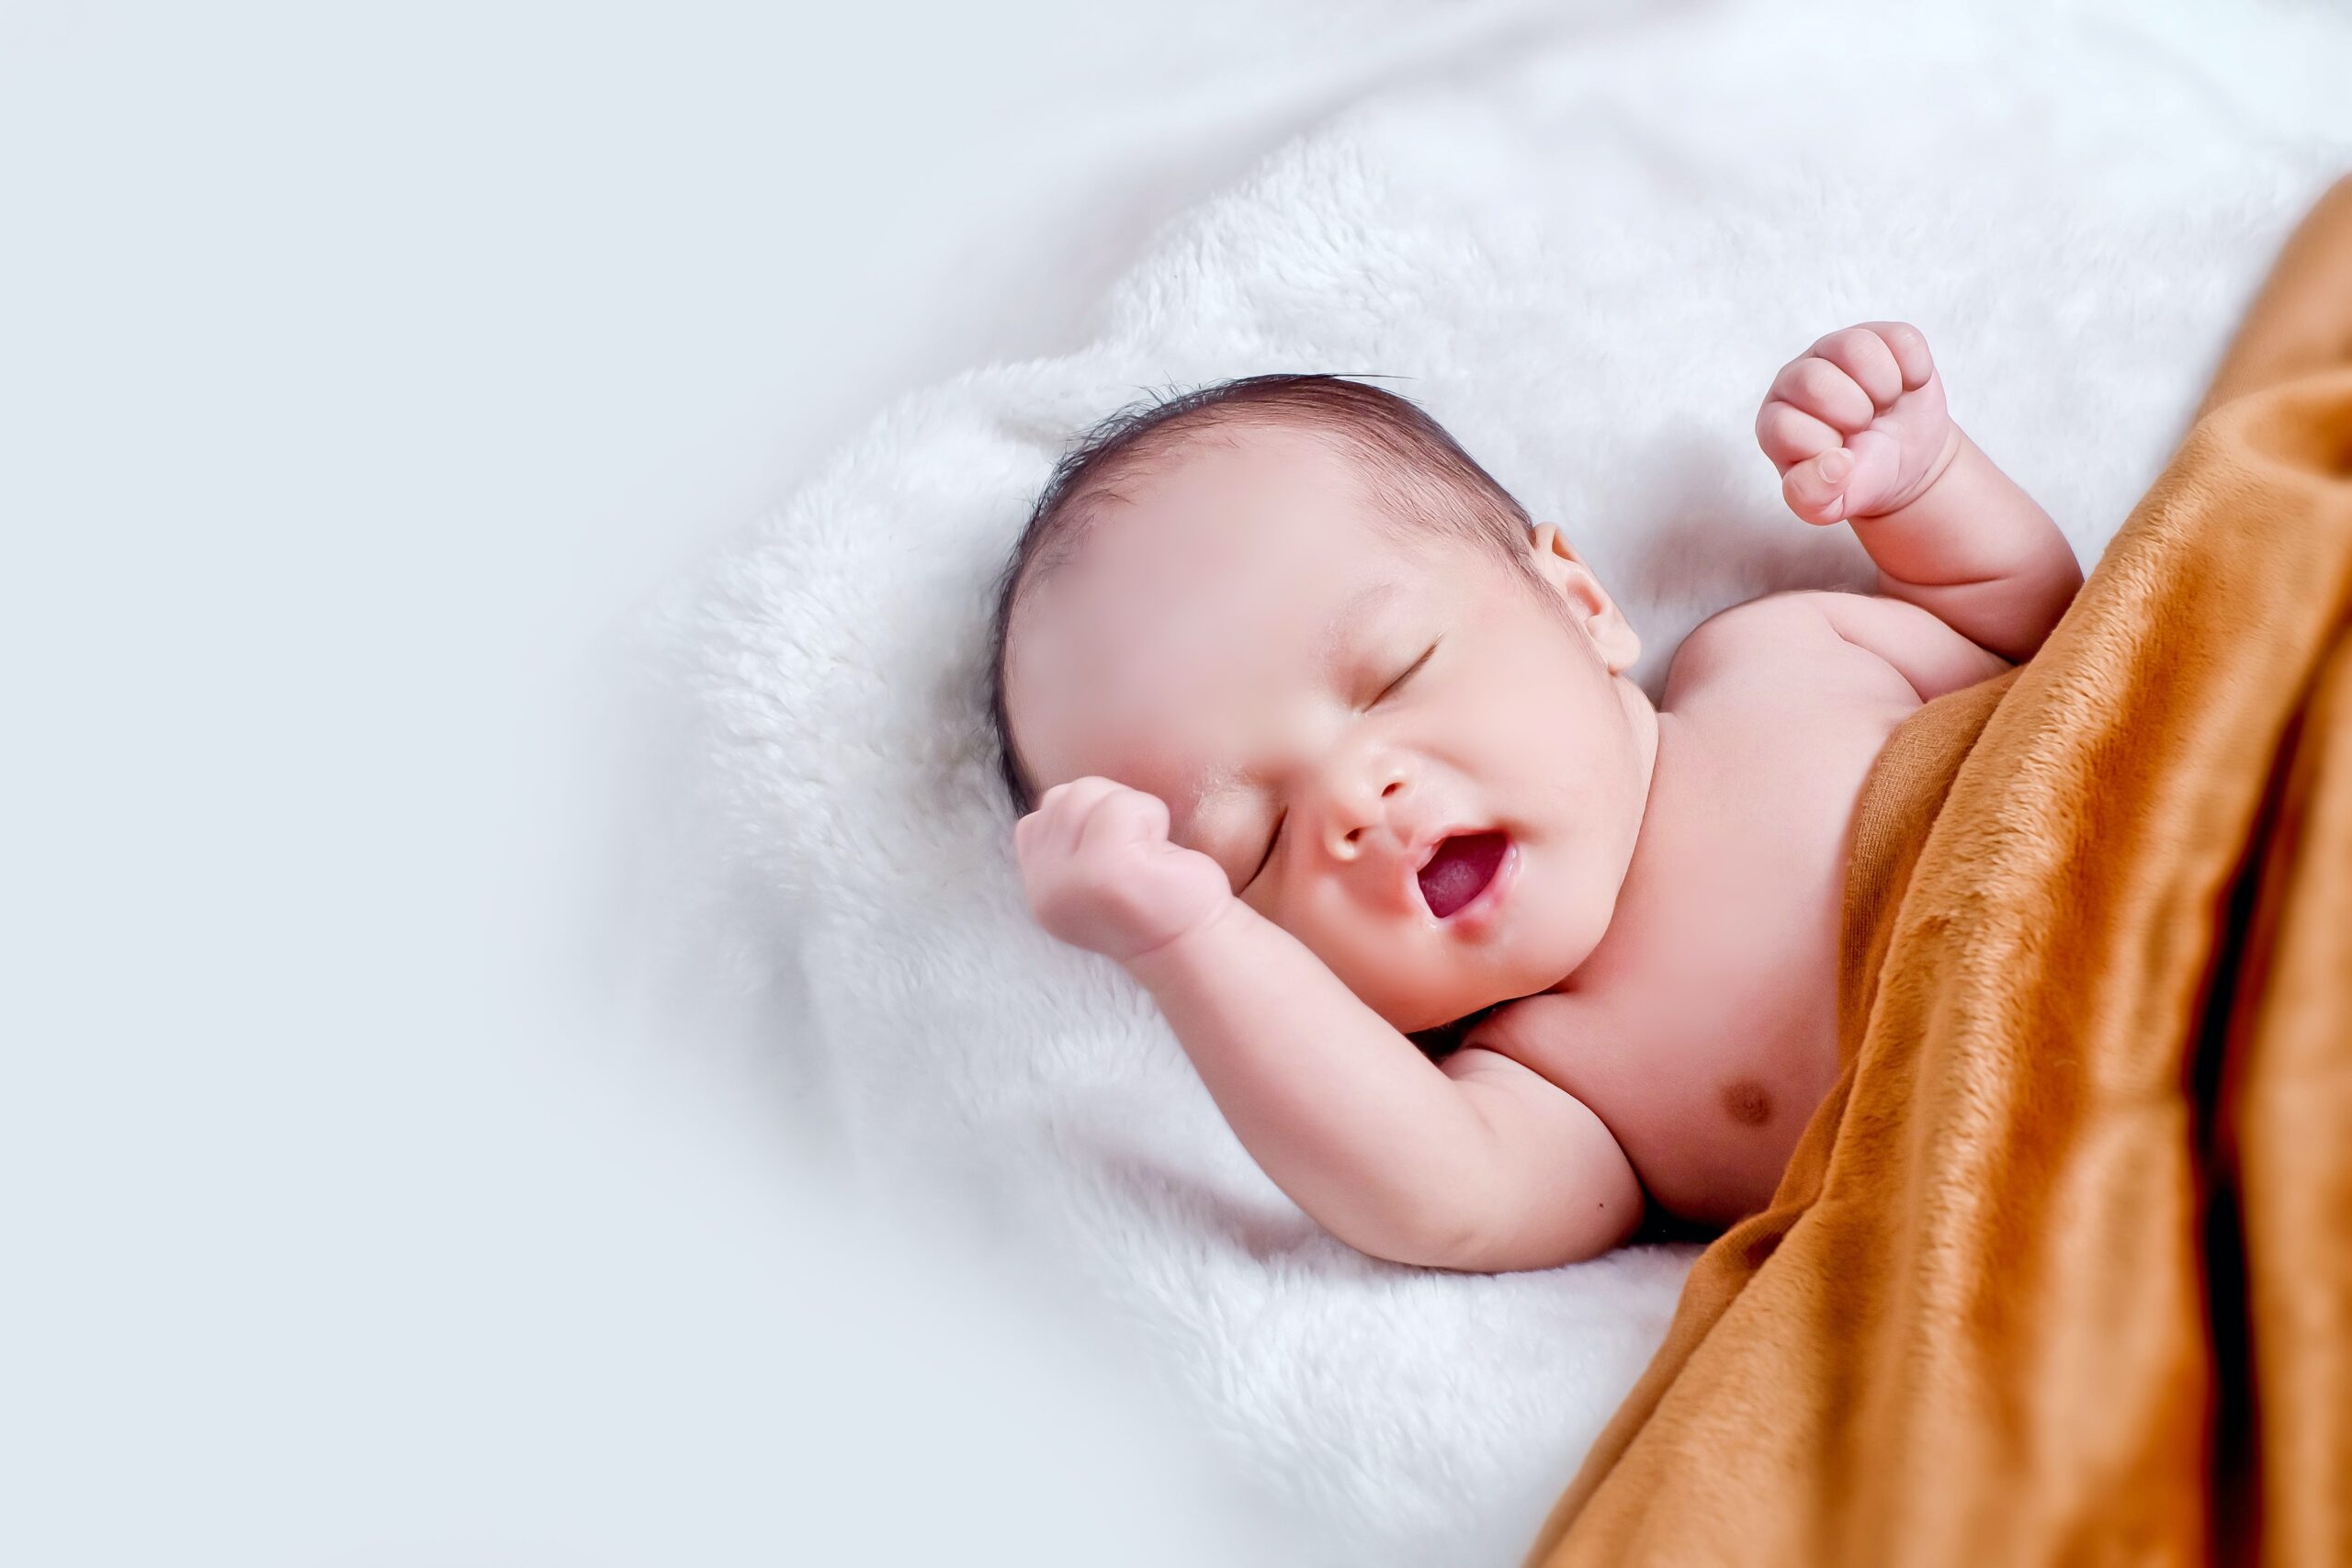 Breastfeeding and the baby’s health